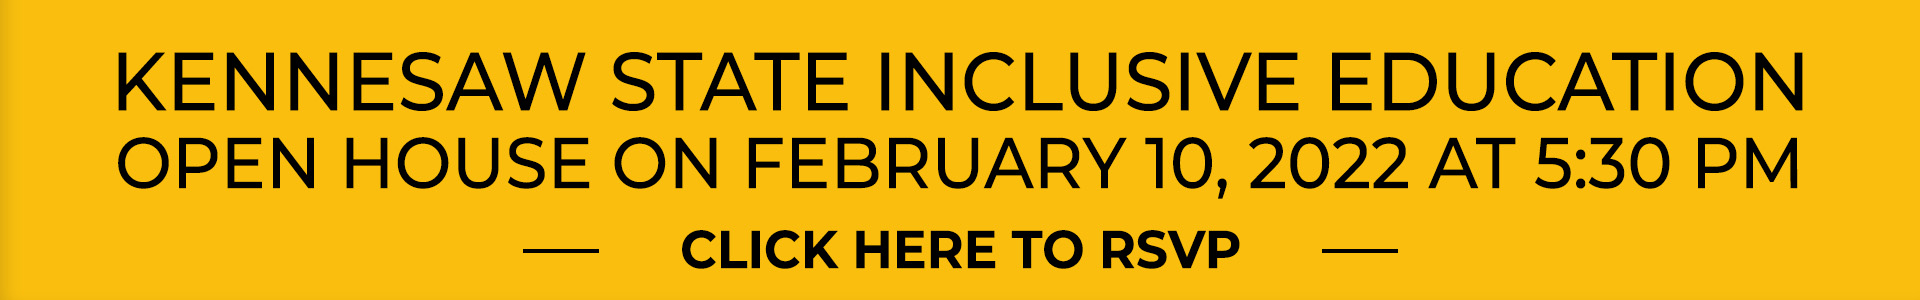 2022 Inclusive Education Open House Feb. 10th @ 530